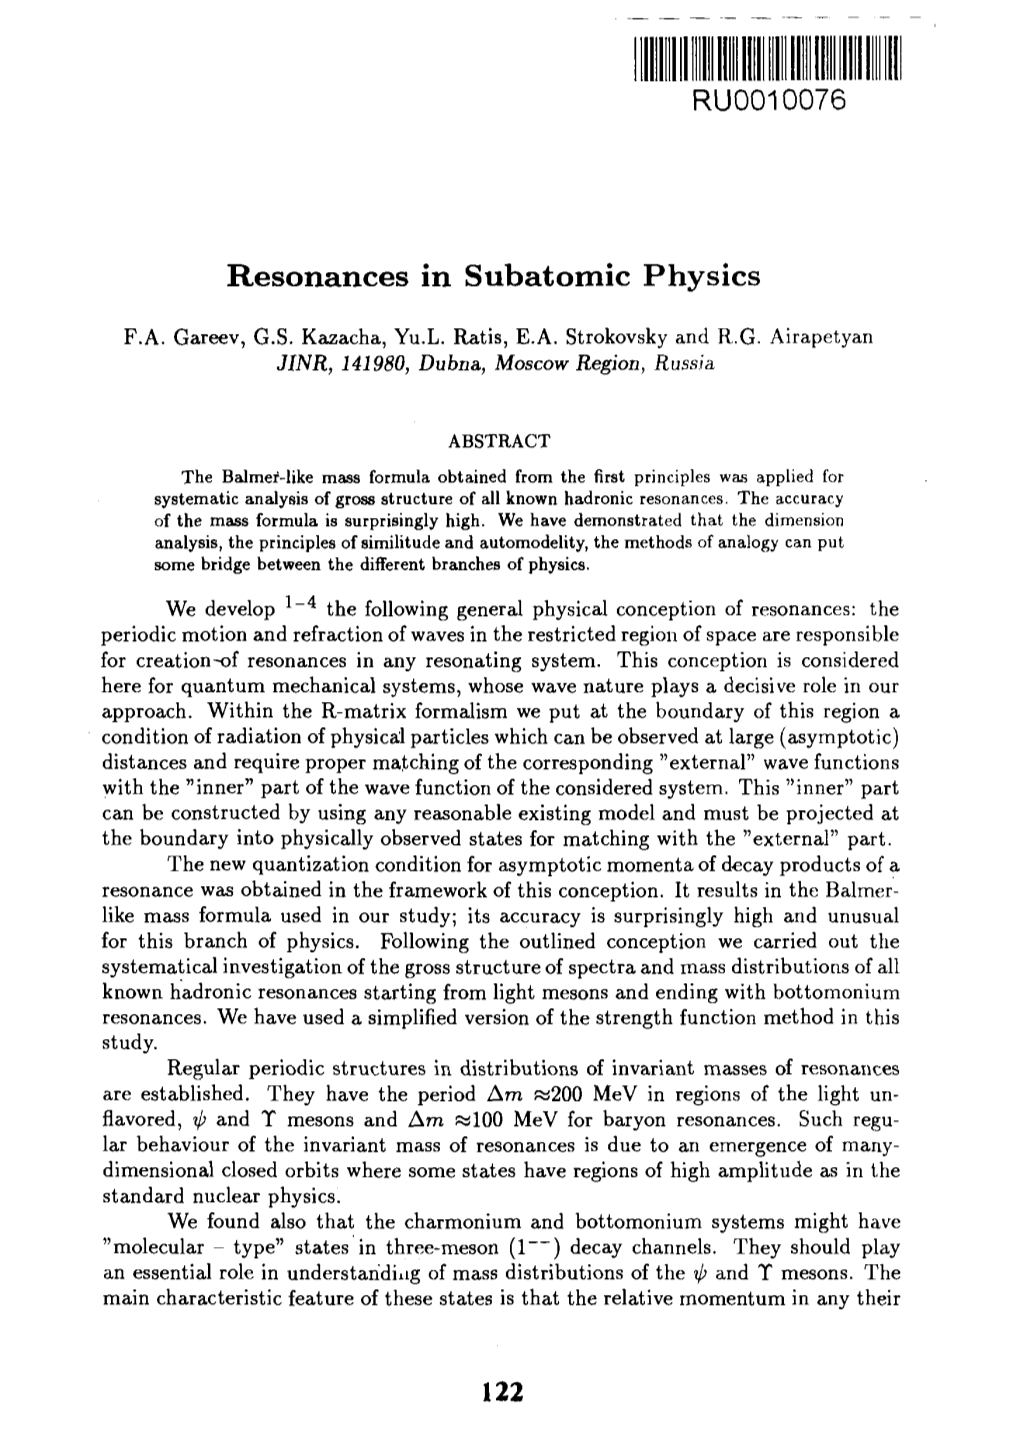 Resonances in Subatomic Physics